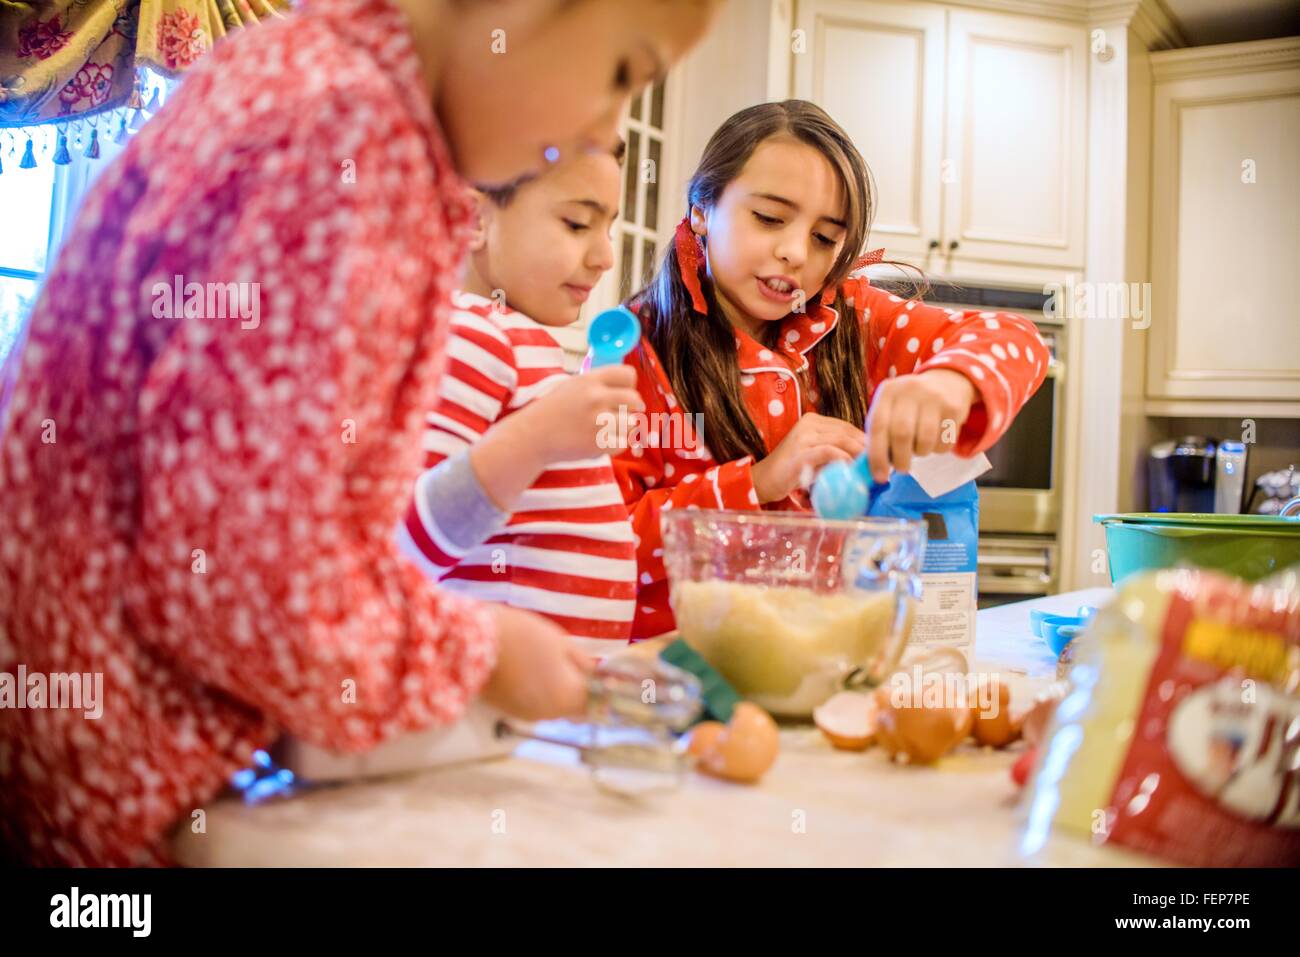 Children in kitchen wearing pyjamas baking Stock Photo